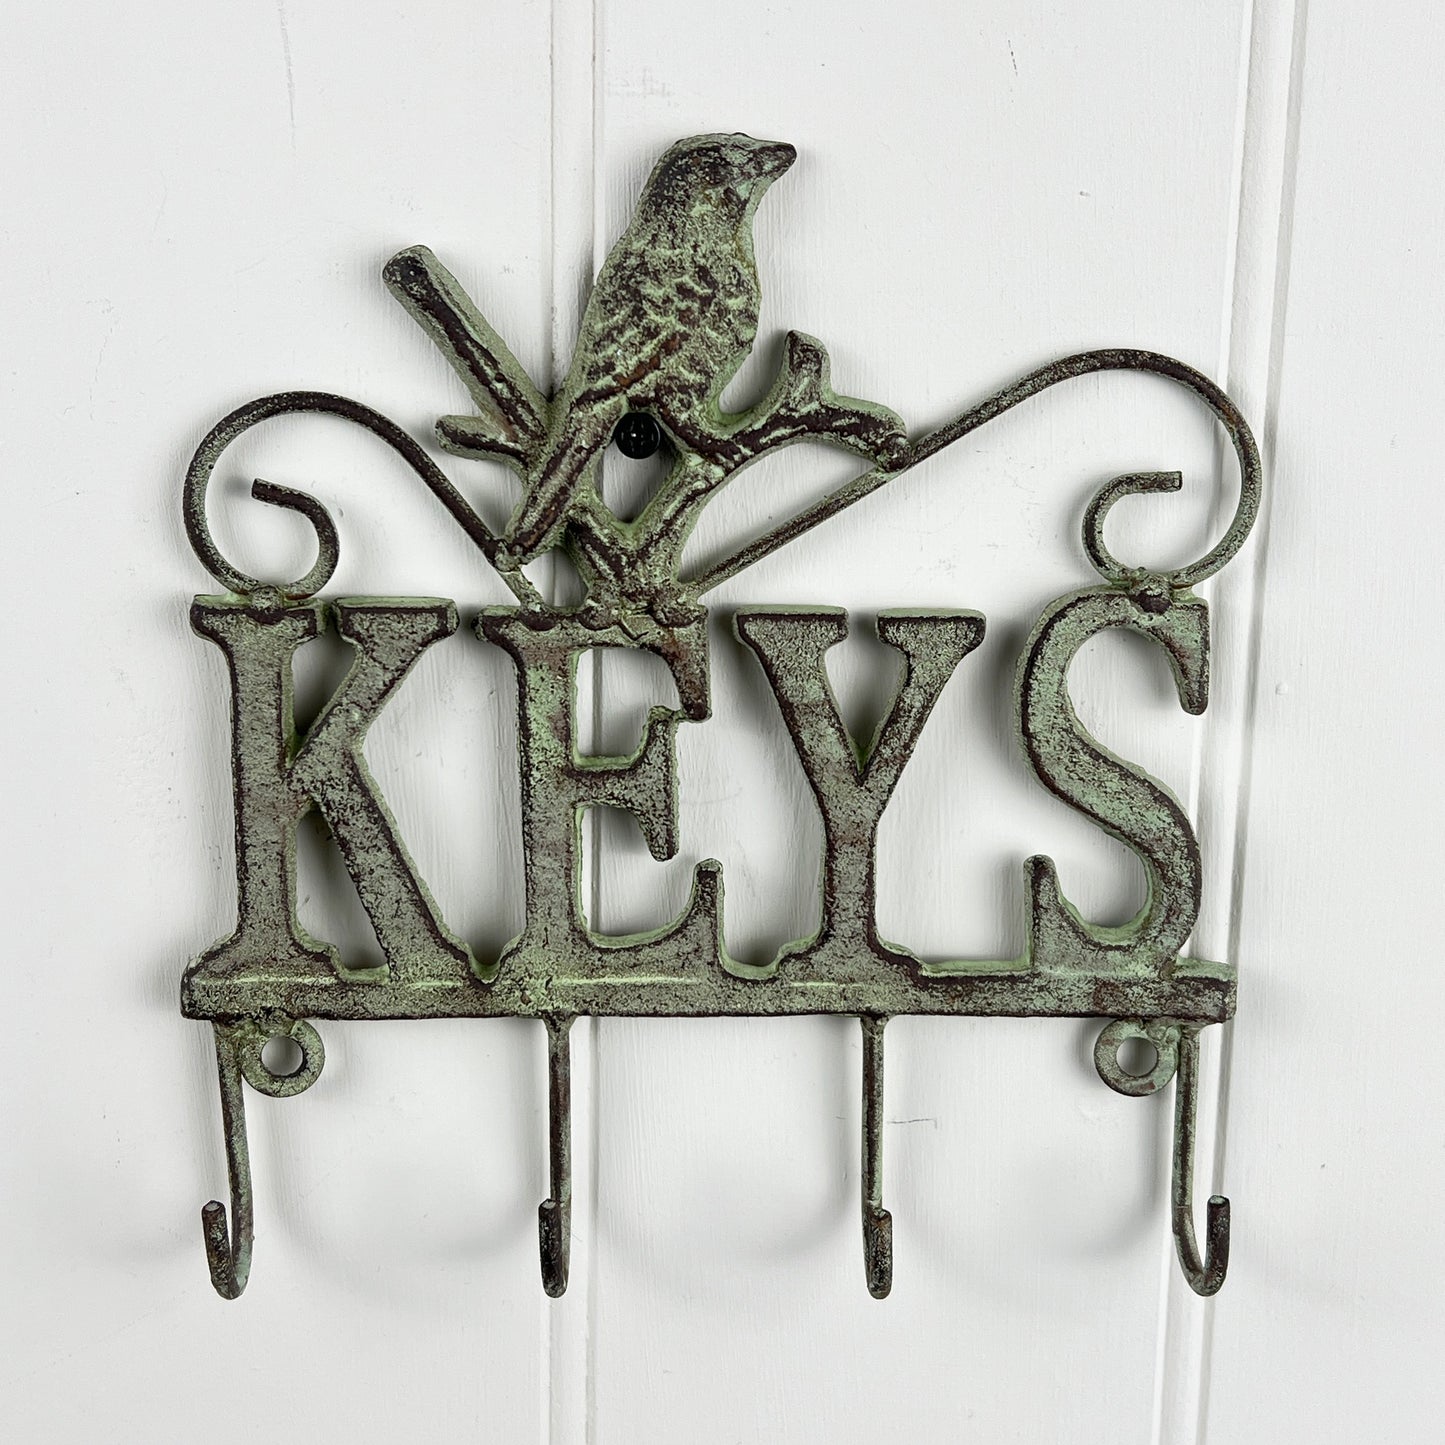 Vintage Style Key Rack with Bird